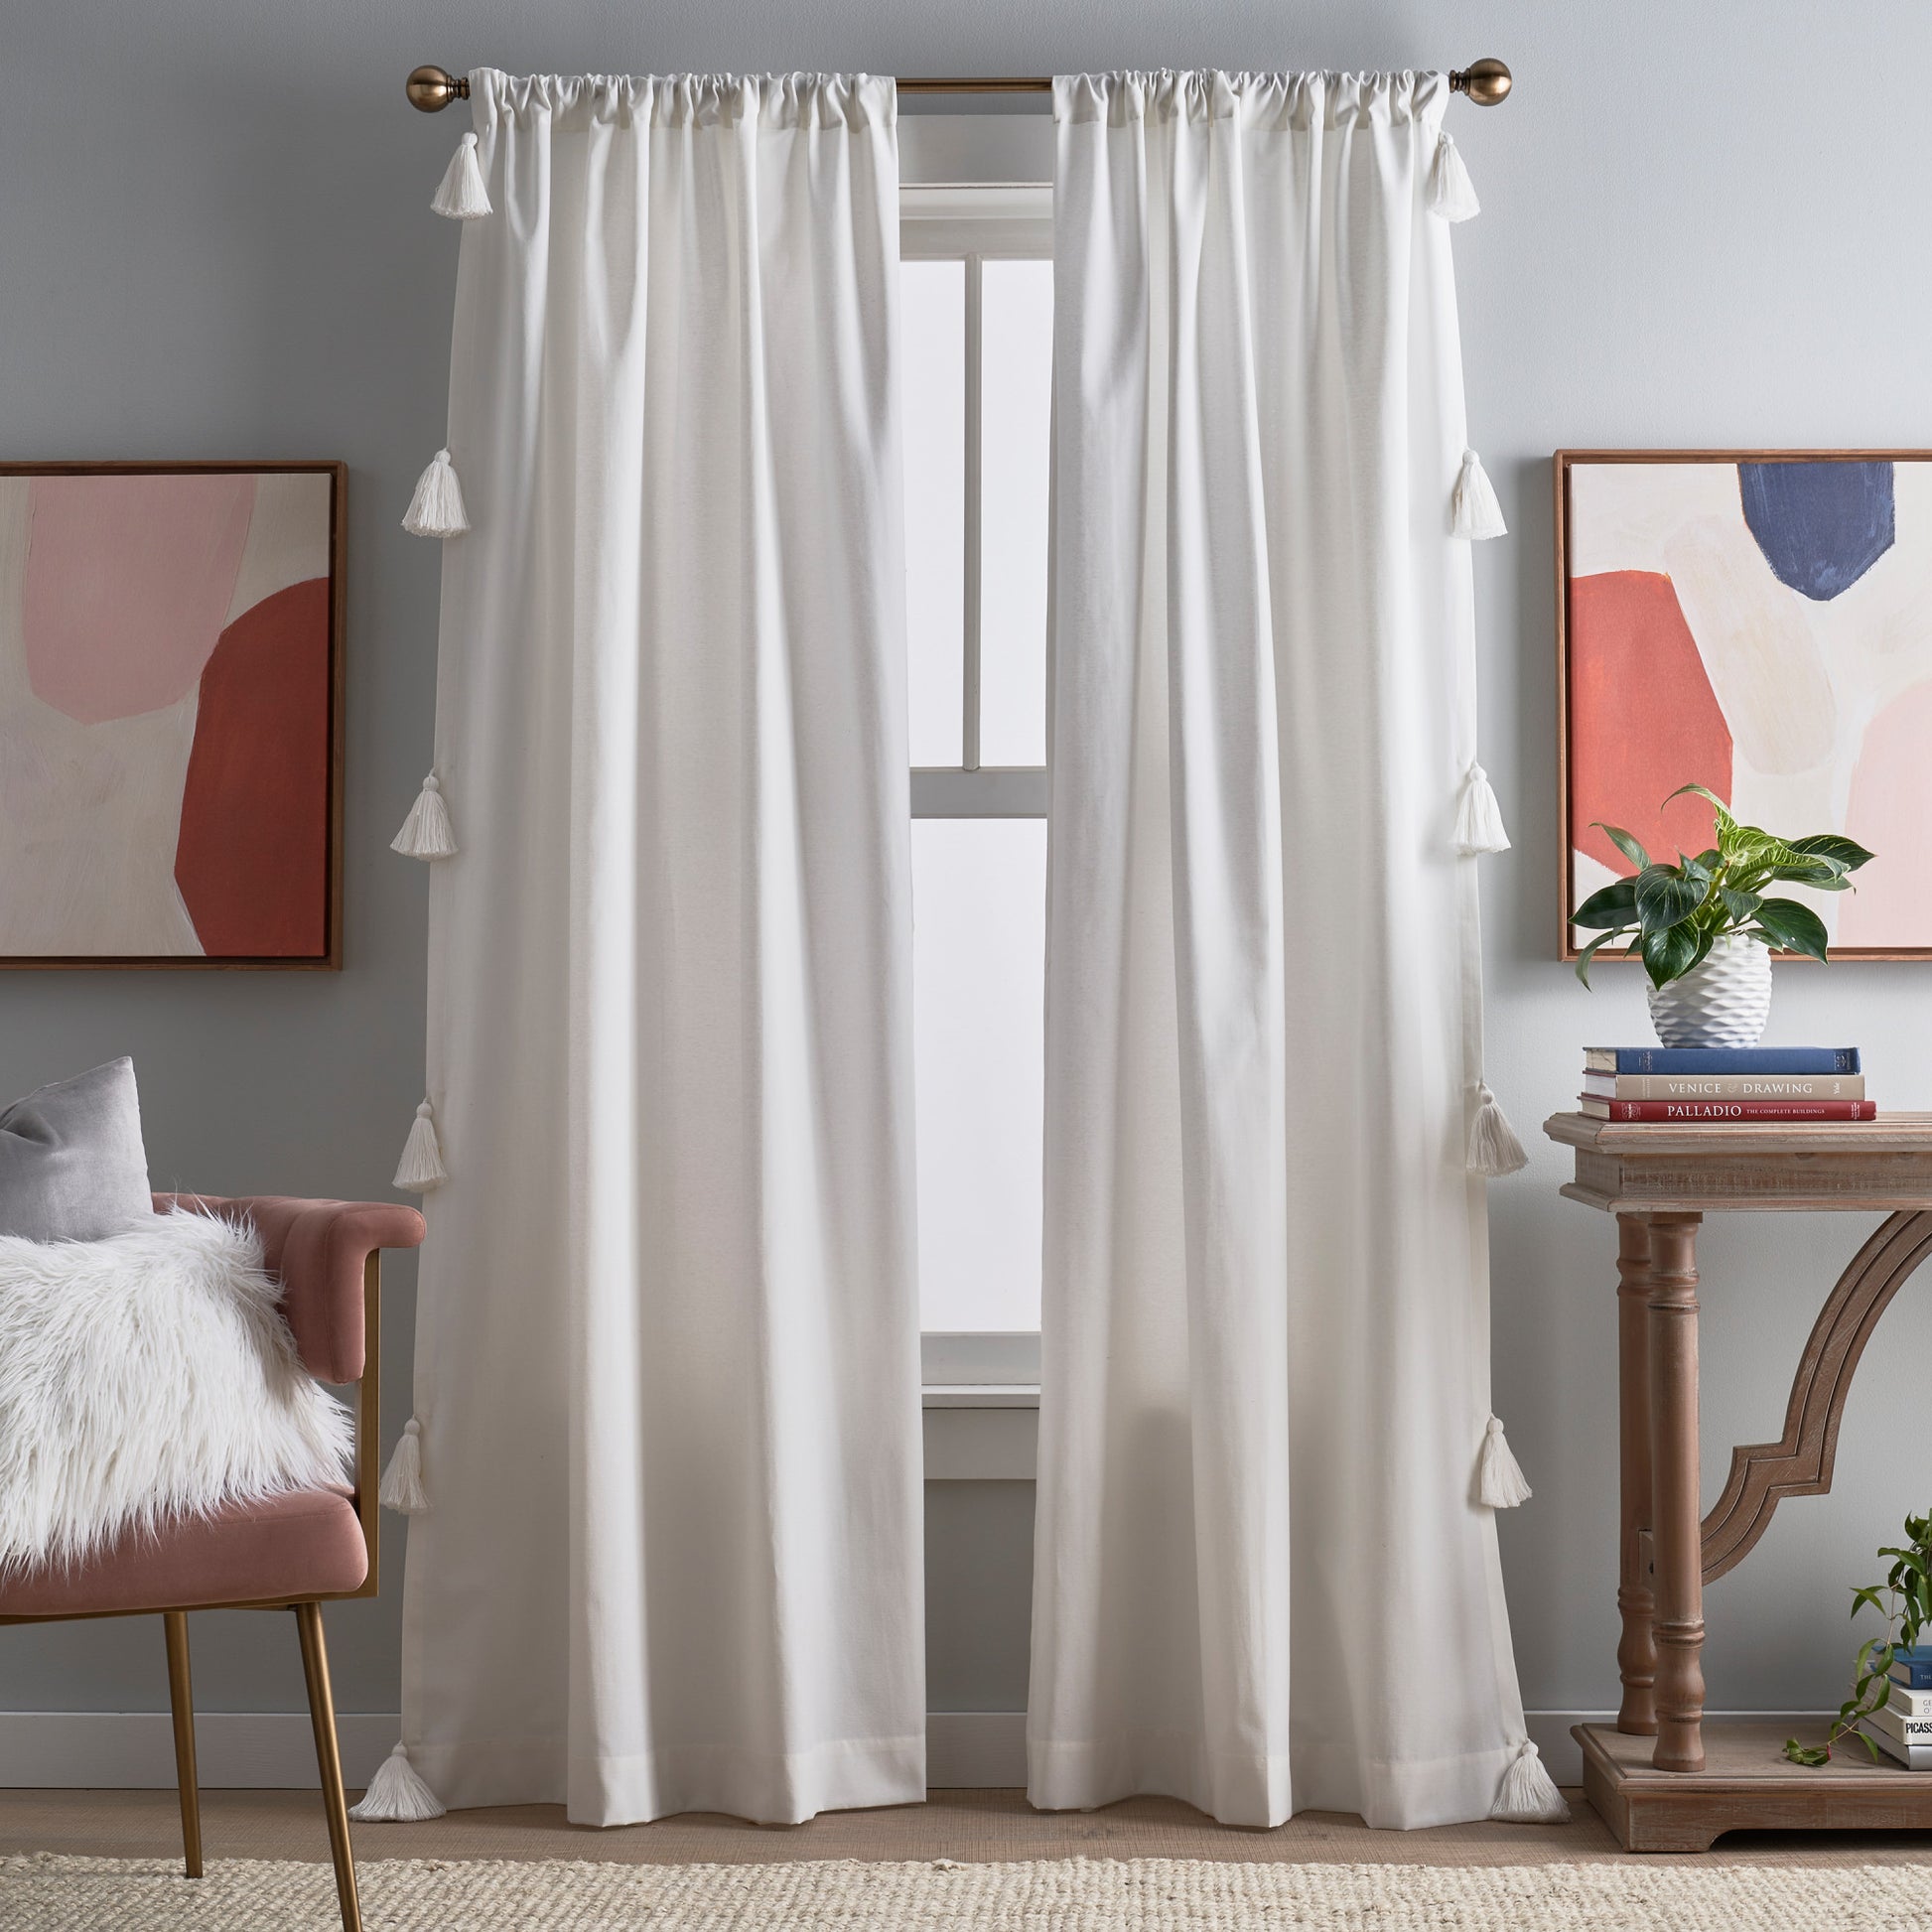 Peri Home Chunky Tassel Curtain Panel